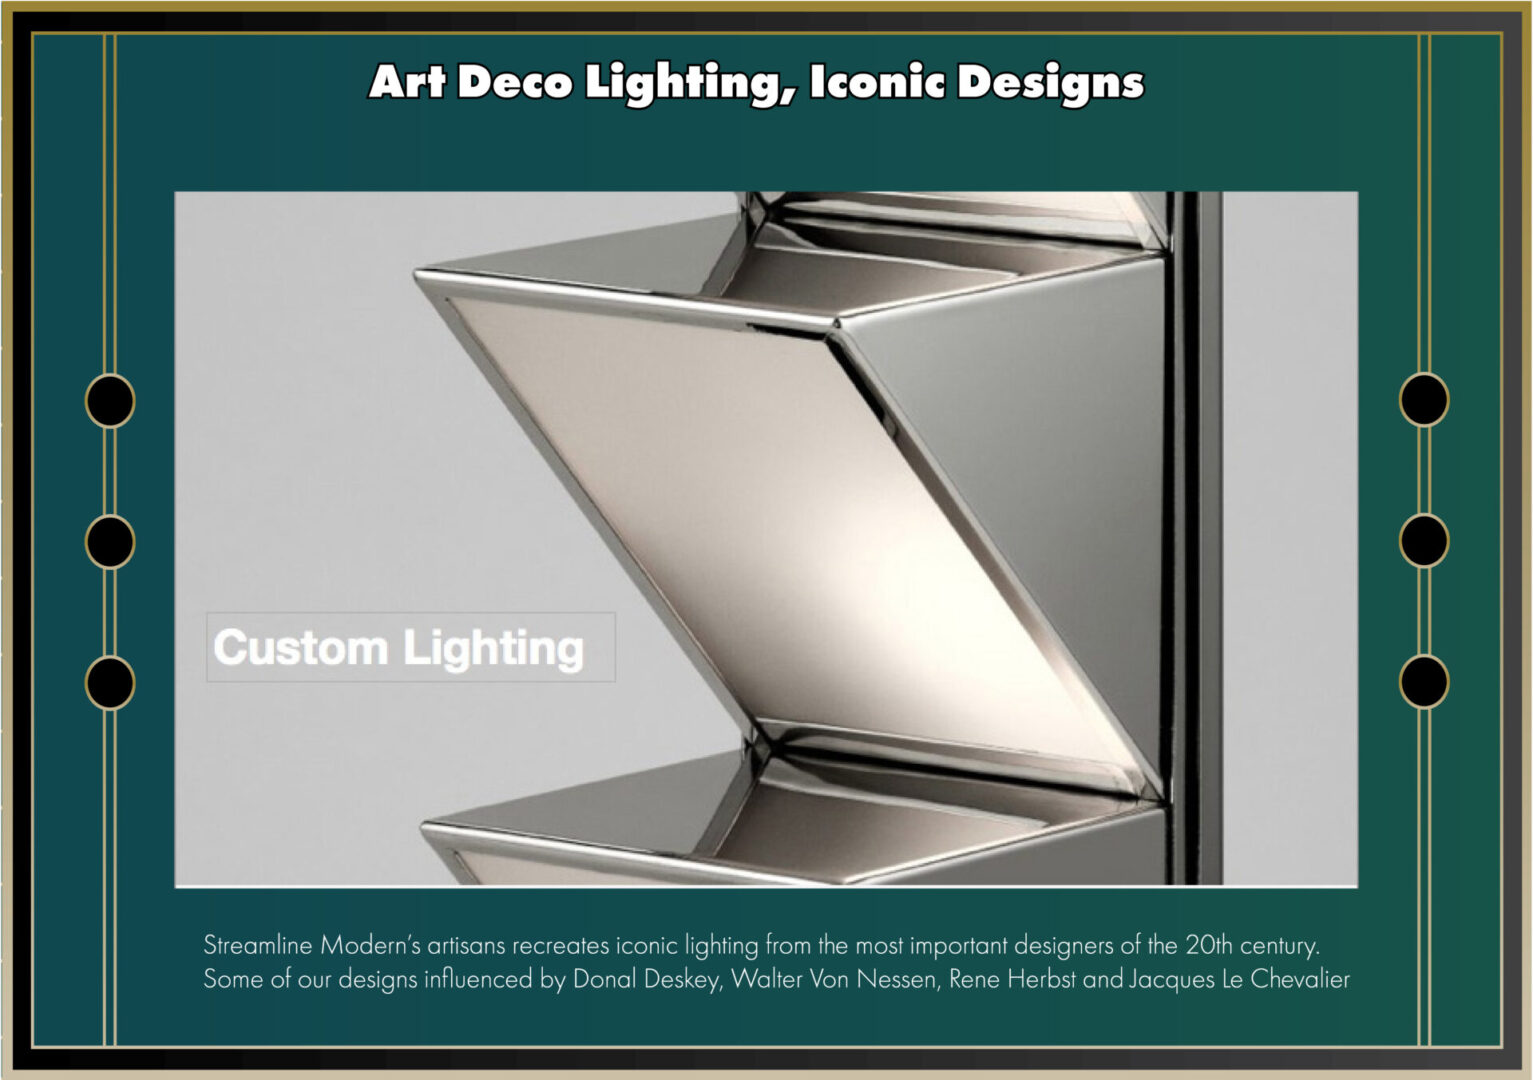 Art Deco Lighting comes in iconic designs